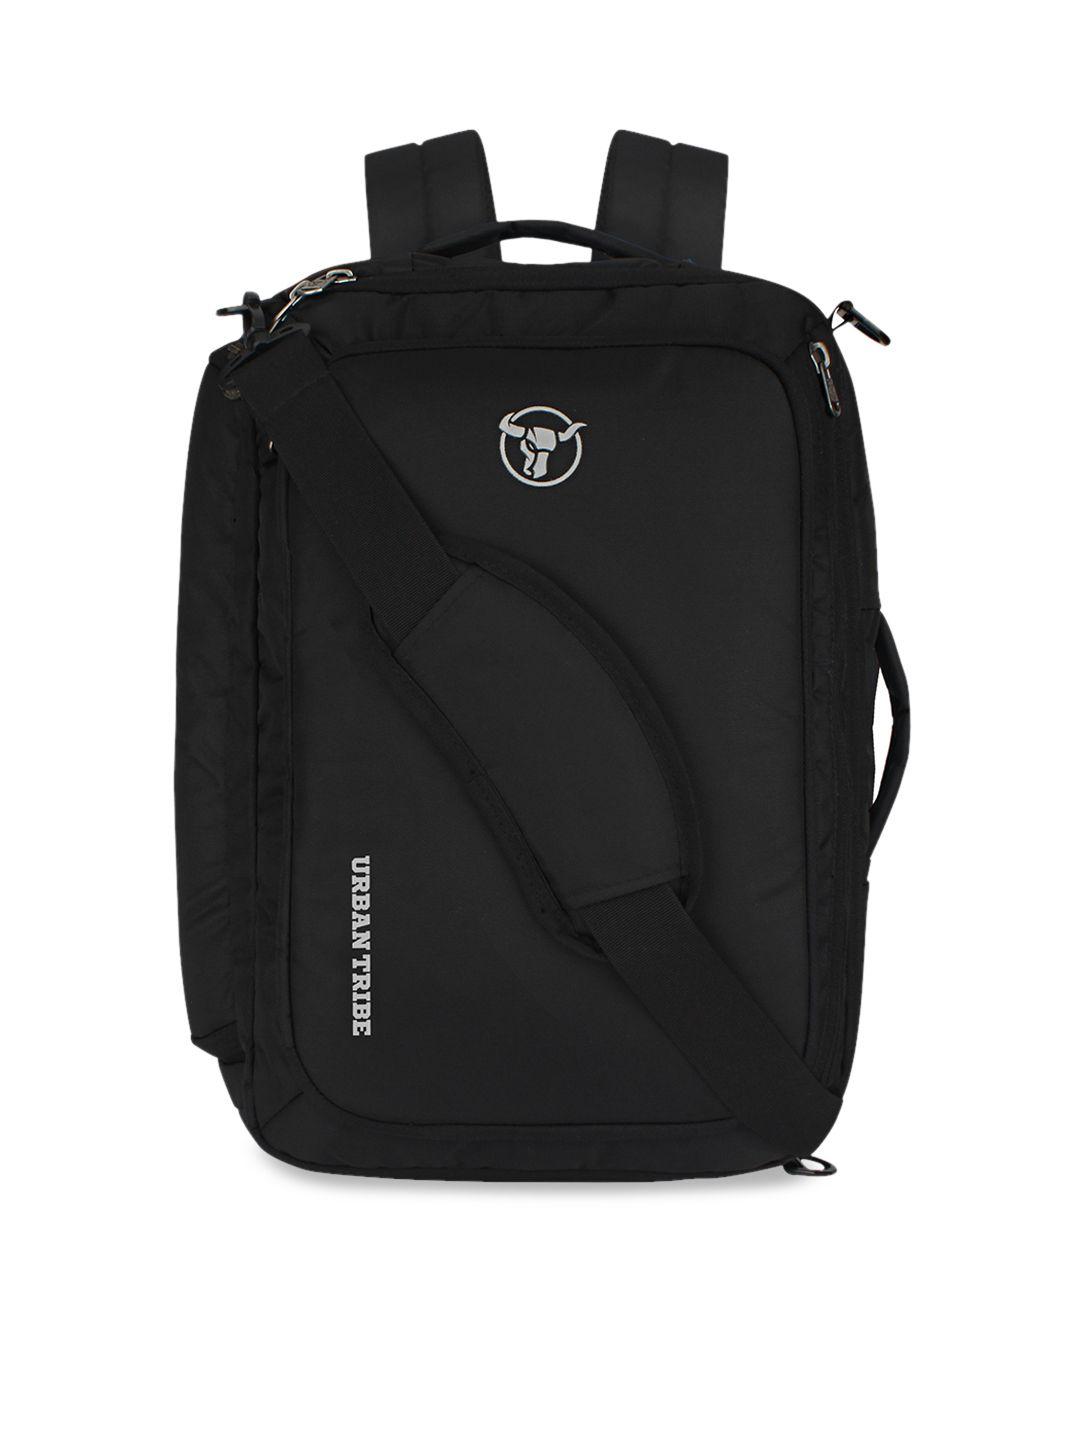 urban tribe unisex black solid backpack